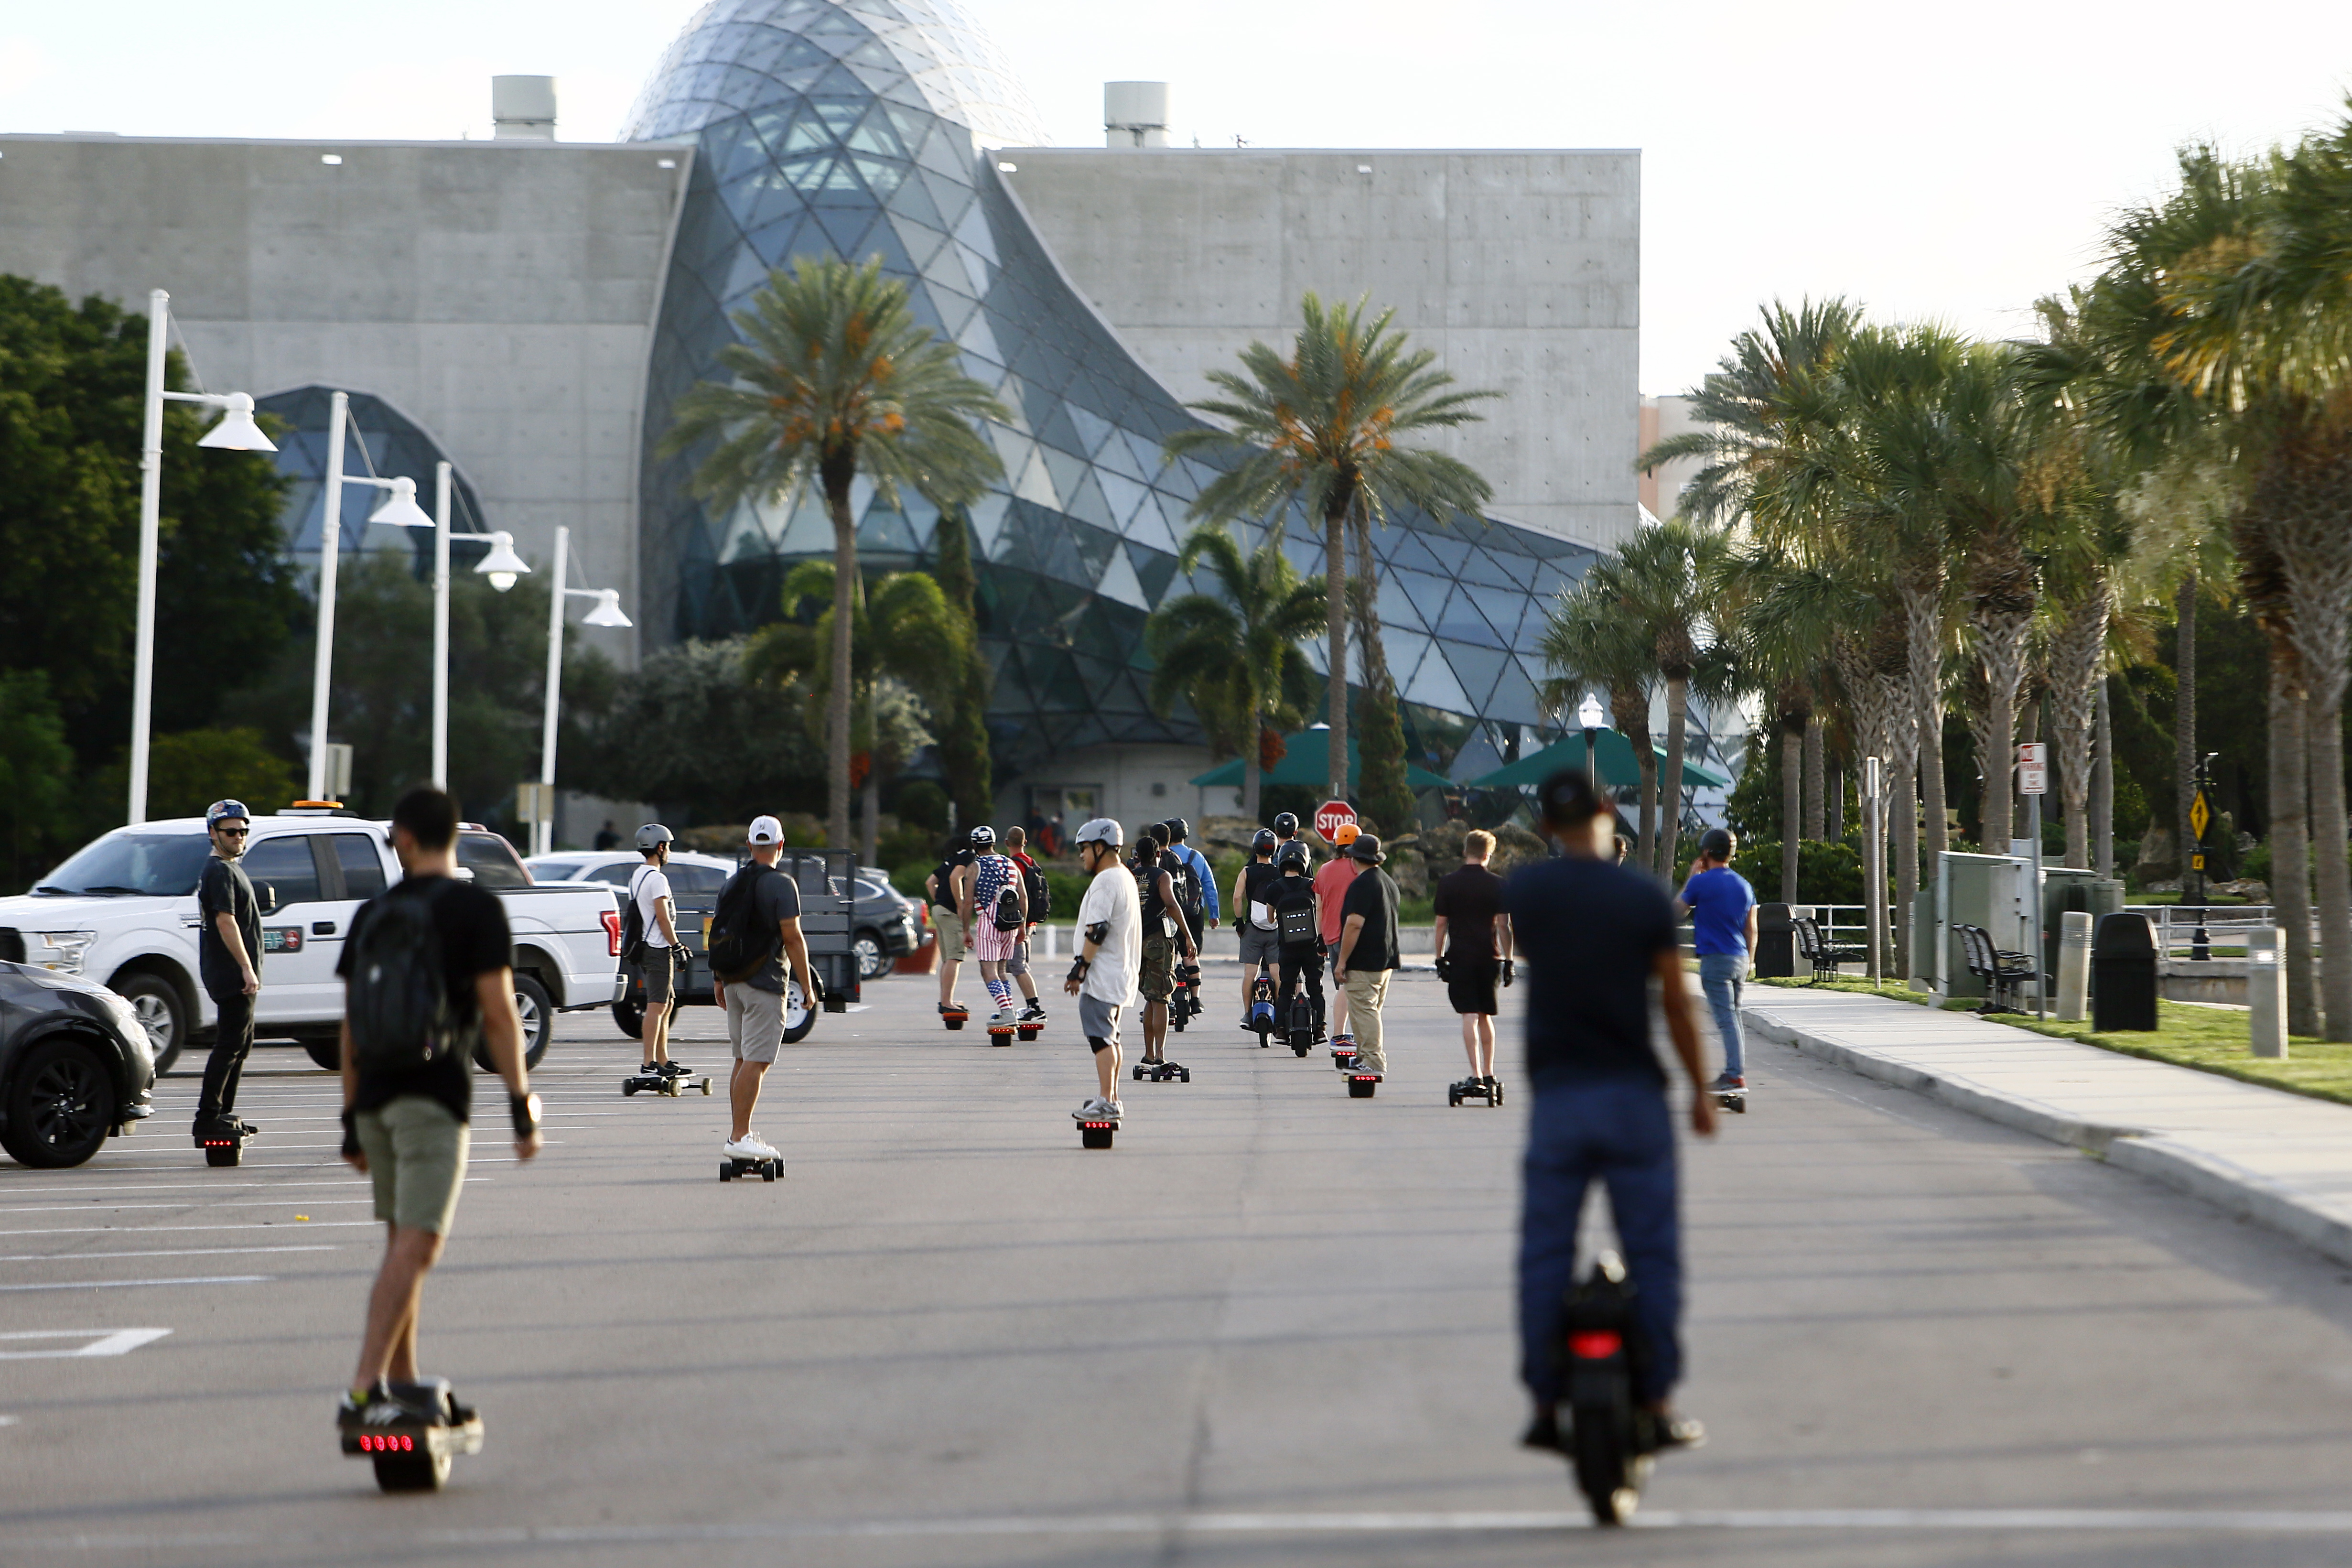 The Shop Driving Miami's Skate Culture Forward